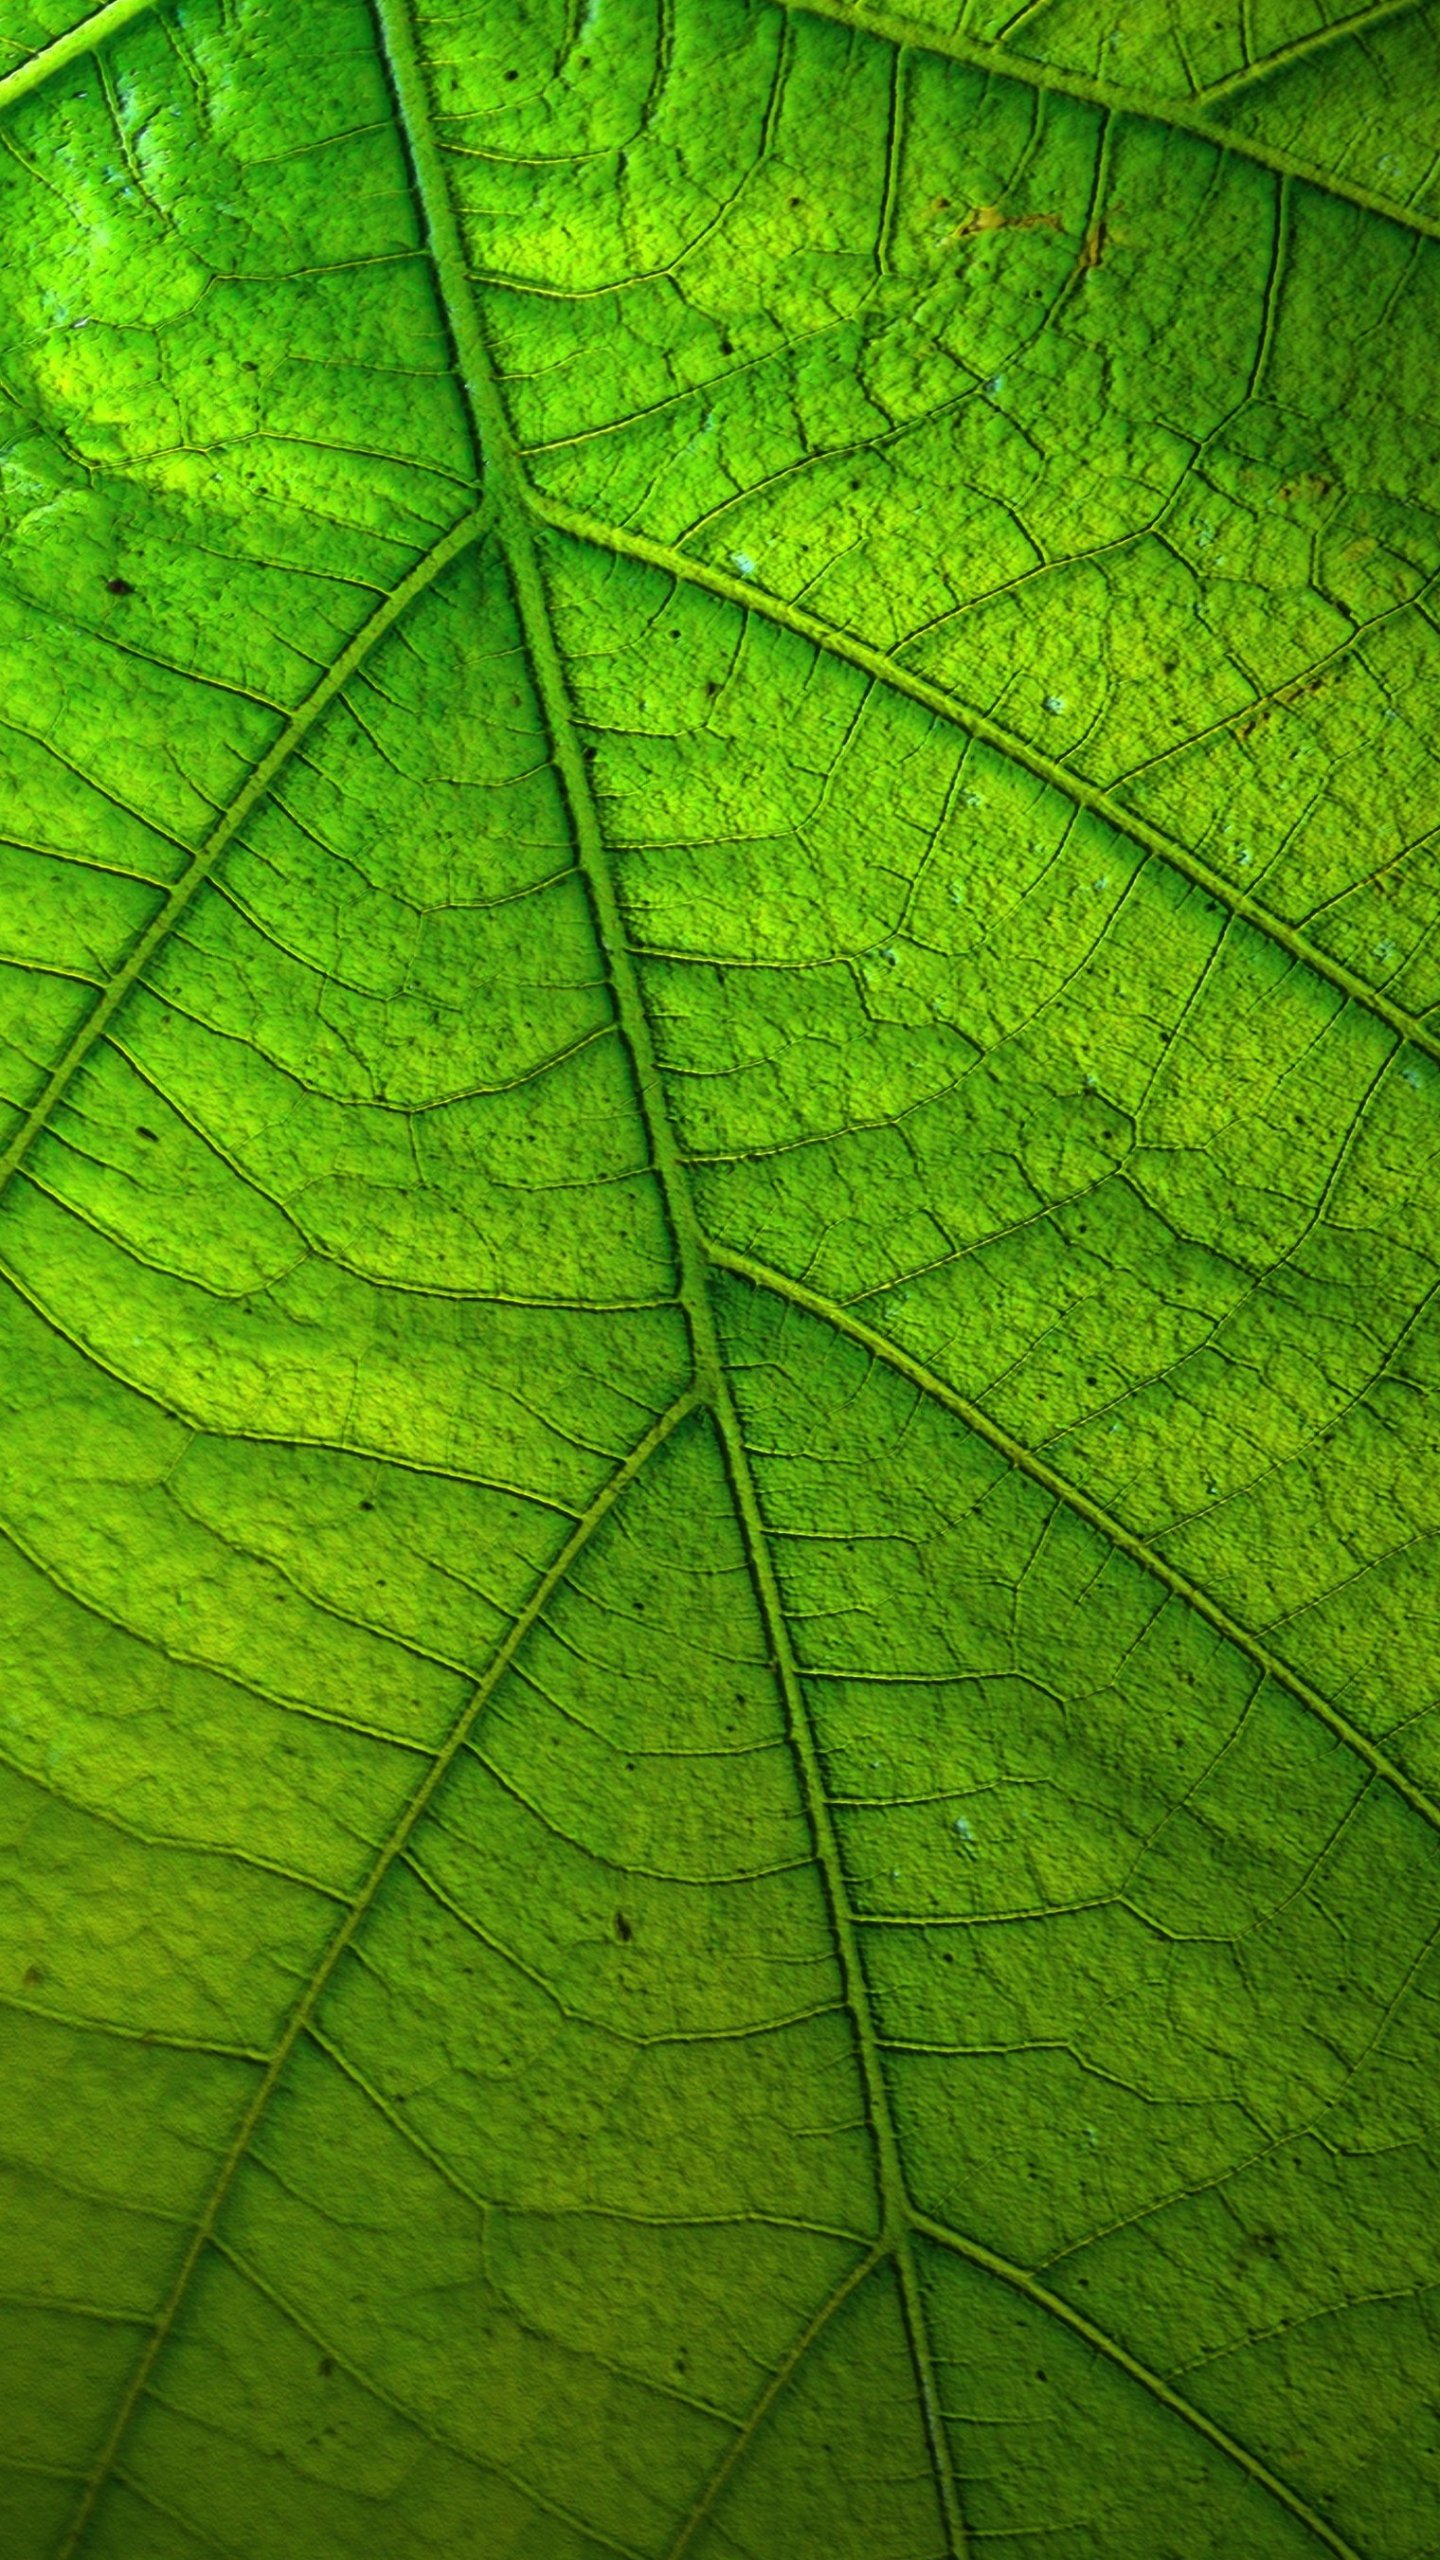 Green Leaf Wallpaper - iPhone, Android & Desktop Backgrounds